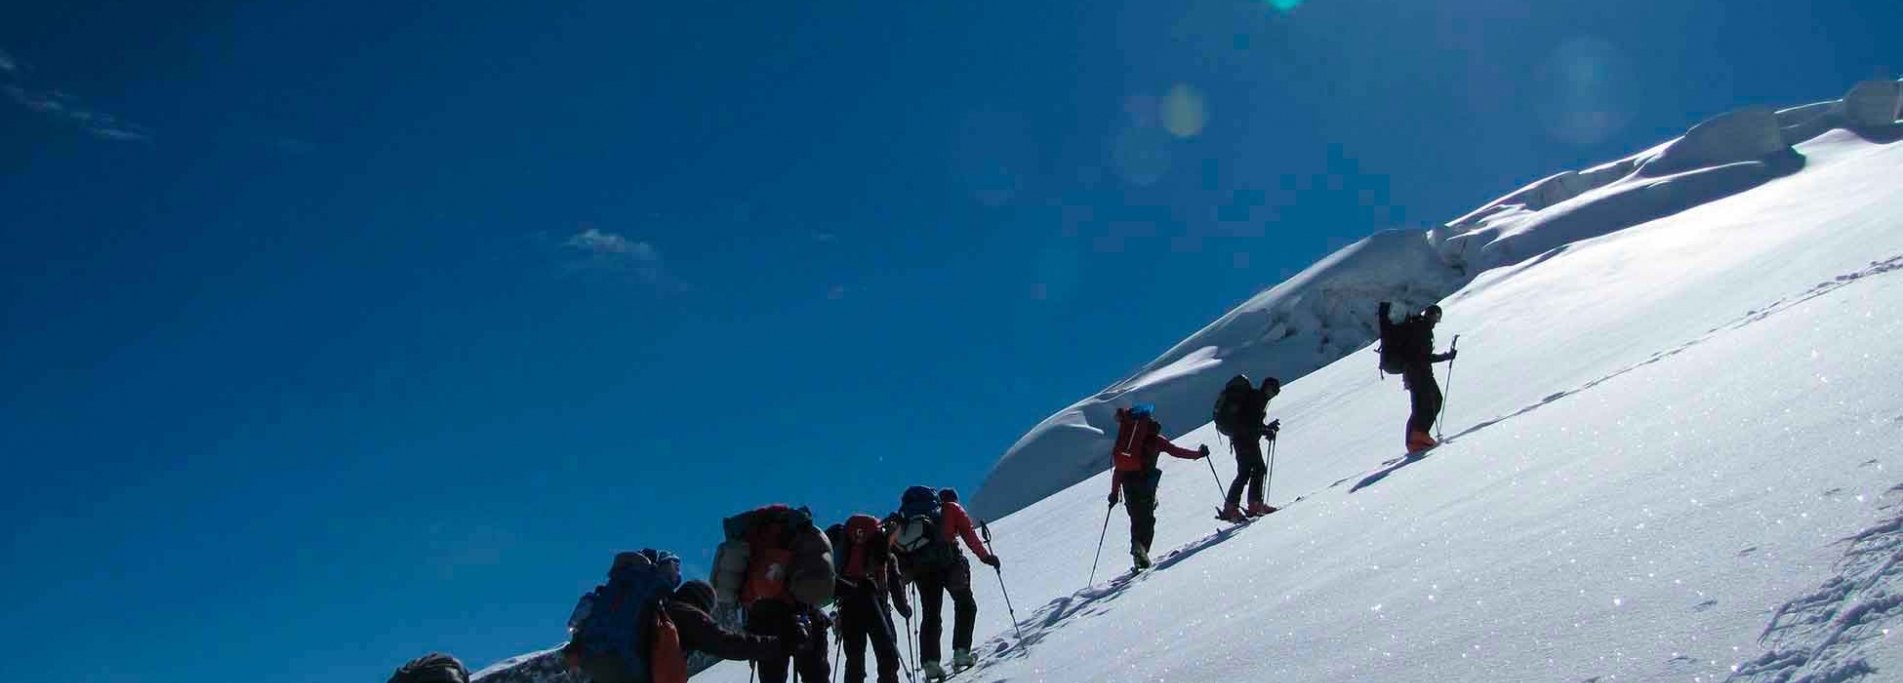 Muztagh-Ata peak 7546m - Ascent with skis